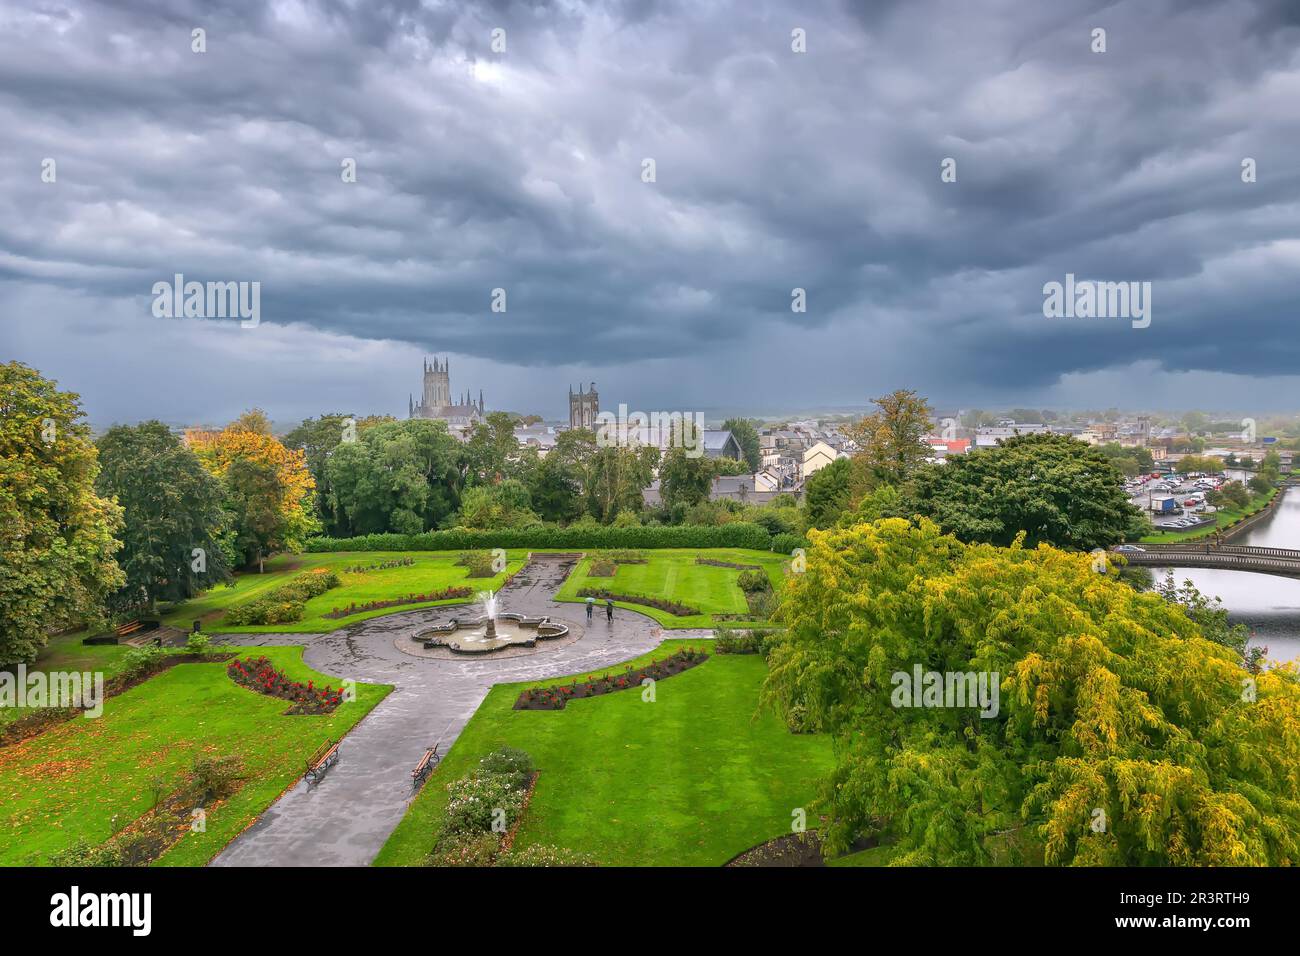 Garden in Kilkenny Castle, Irelandv Stock Photo